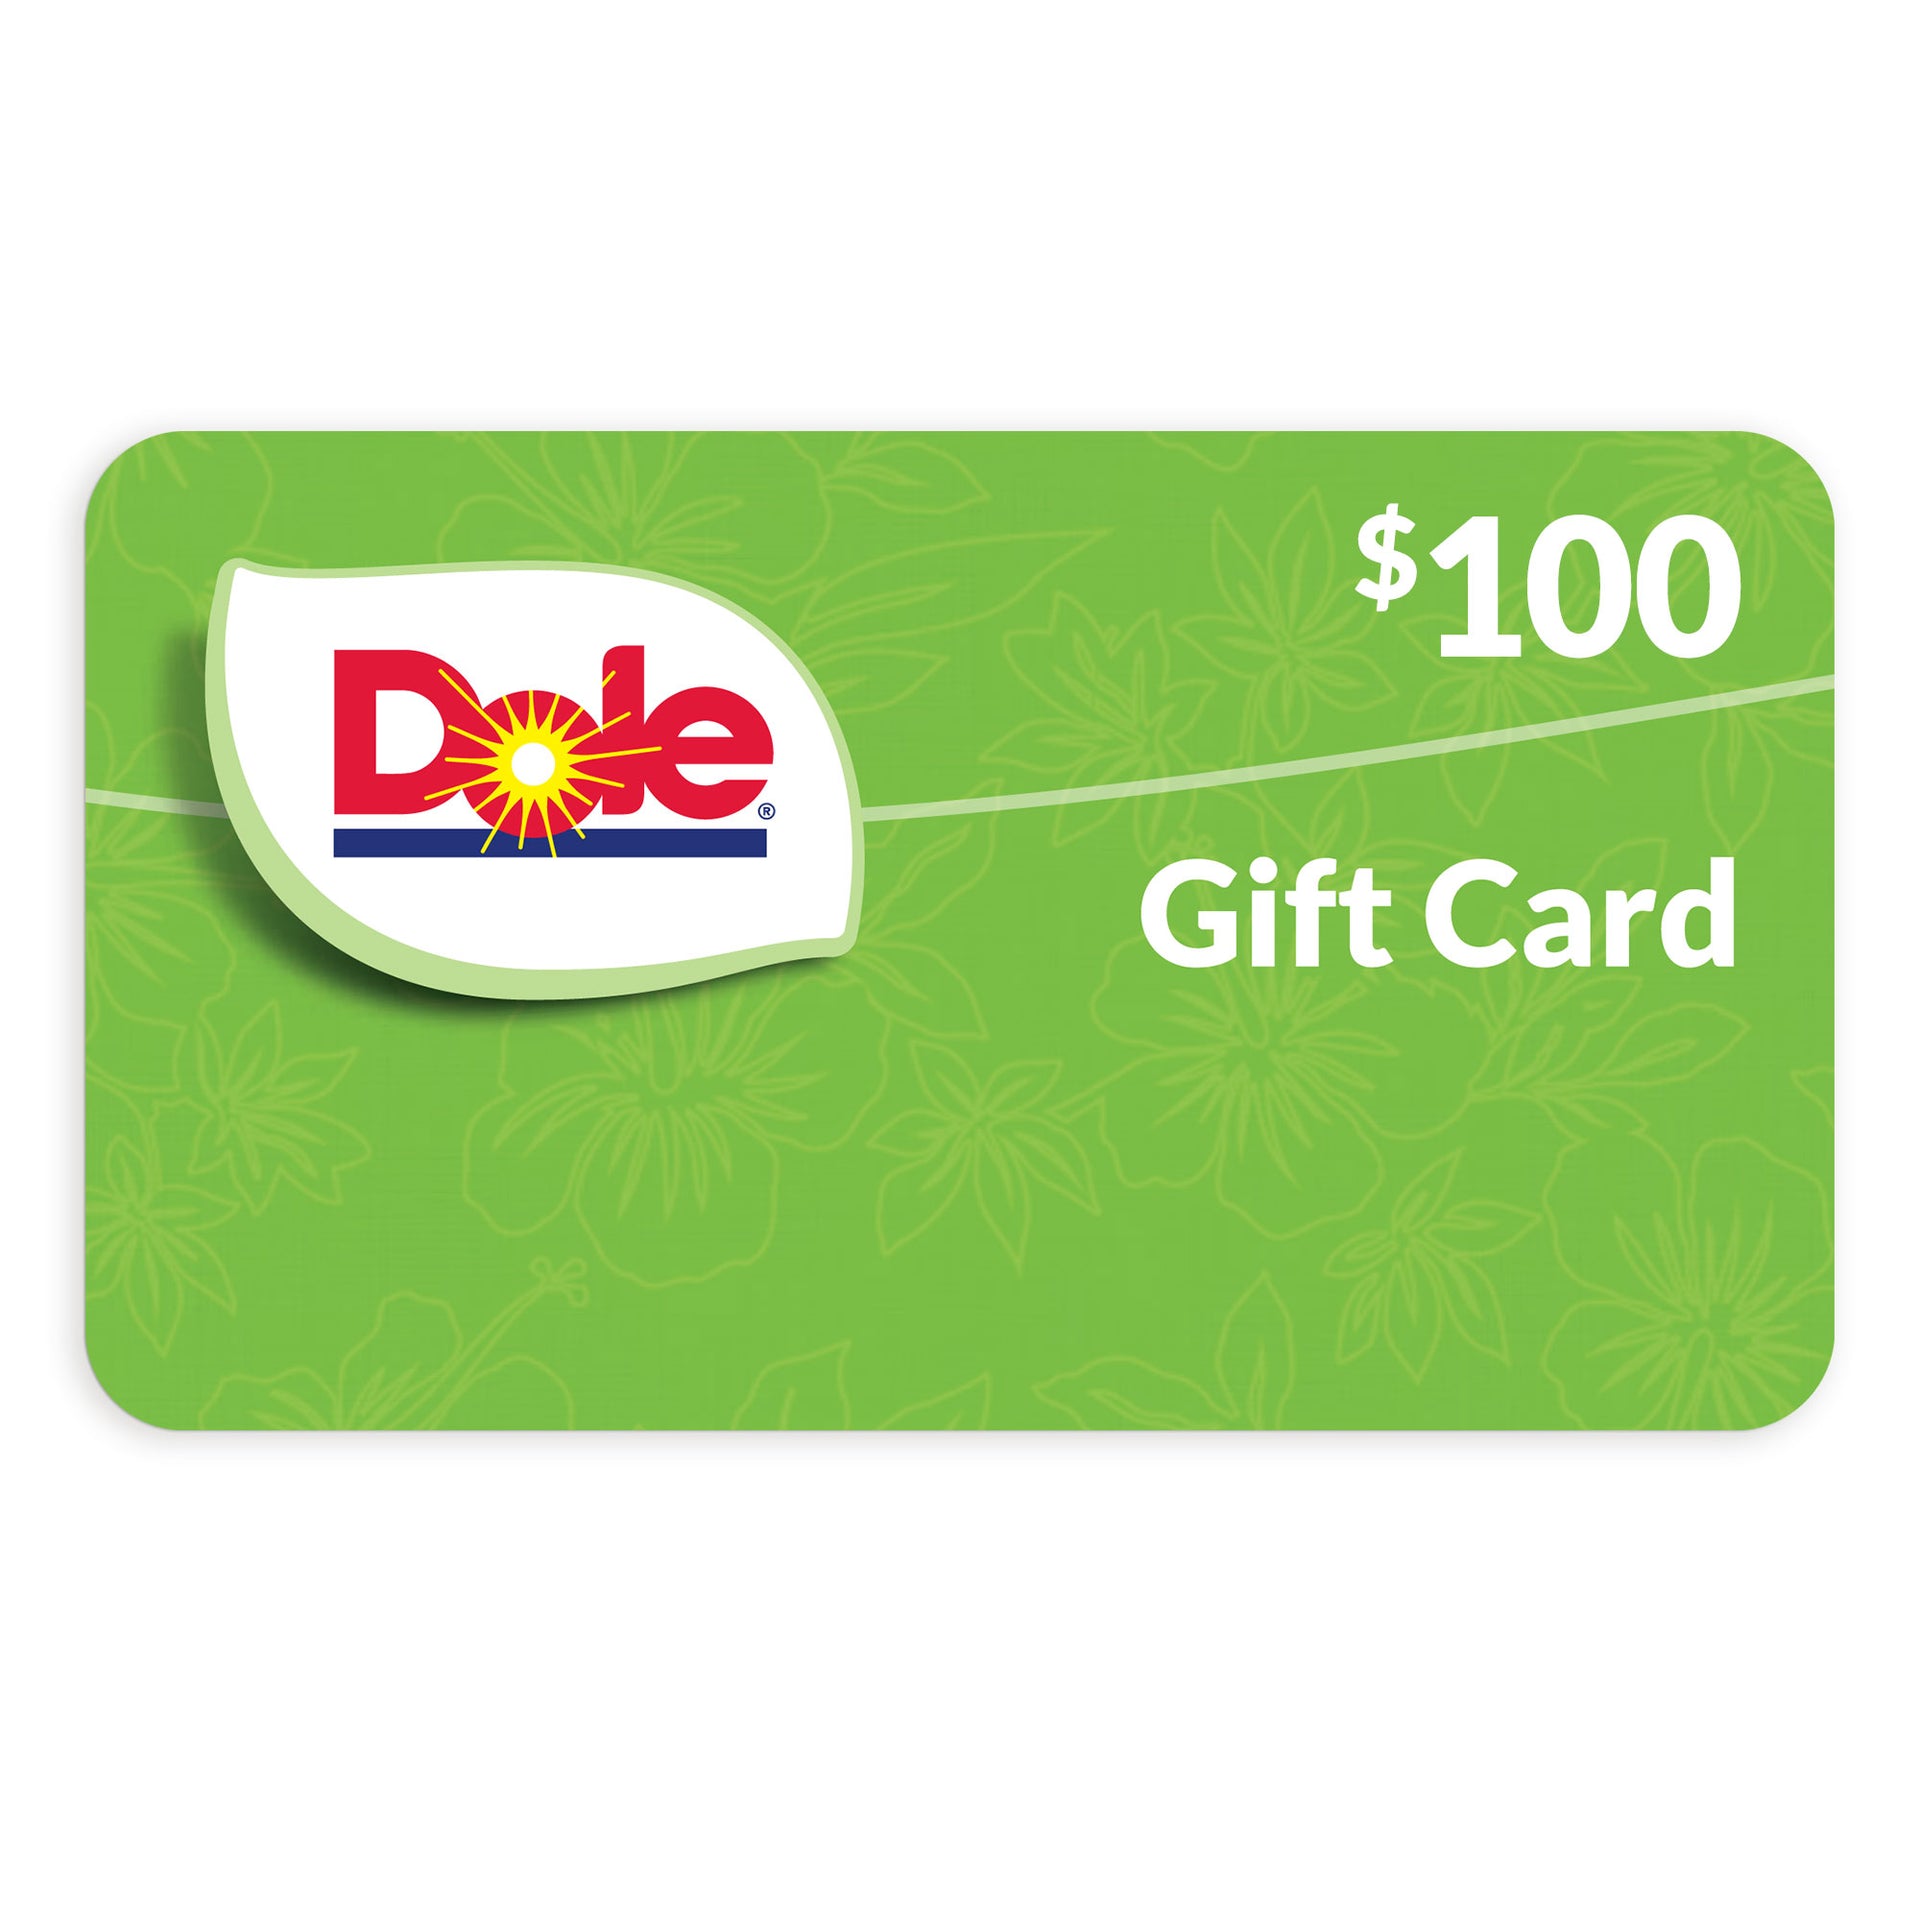 Dole Fruit Hawaii Gift Card $100